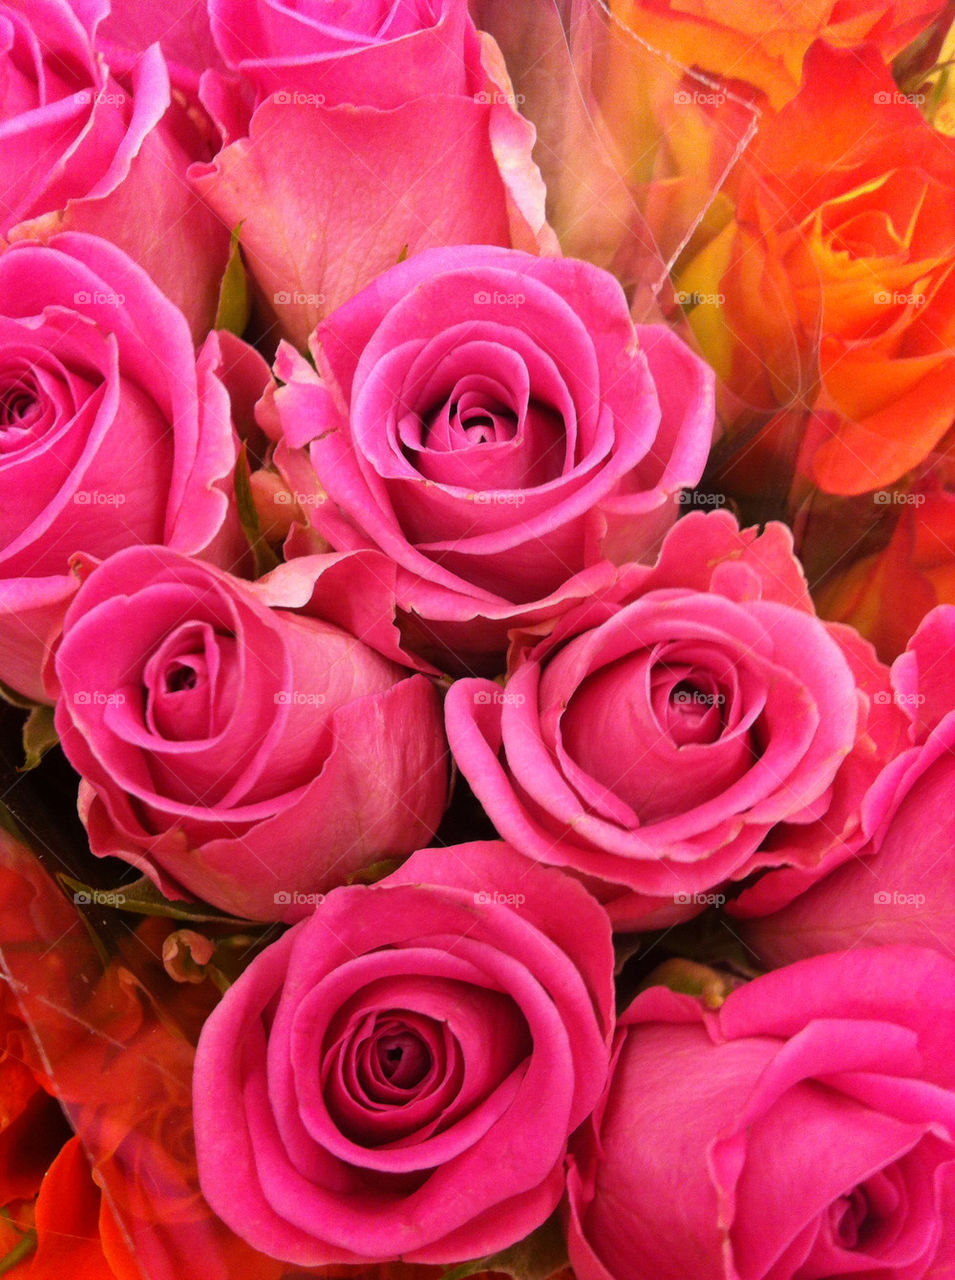 pink roses by stefanzander